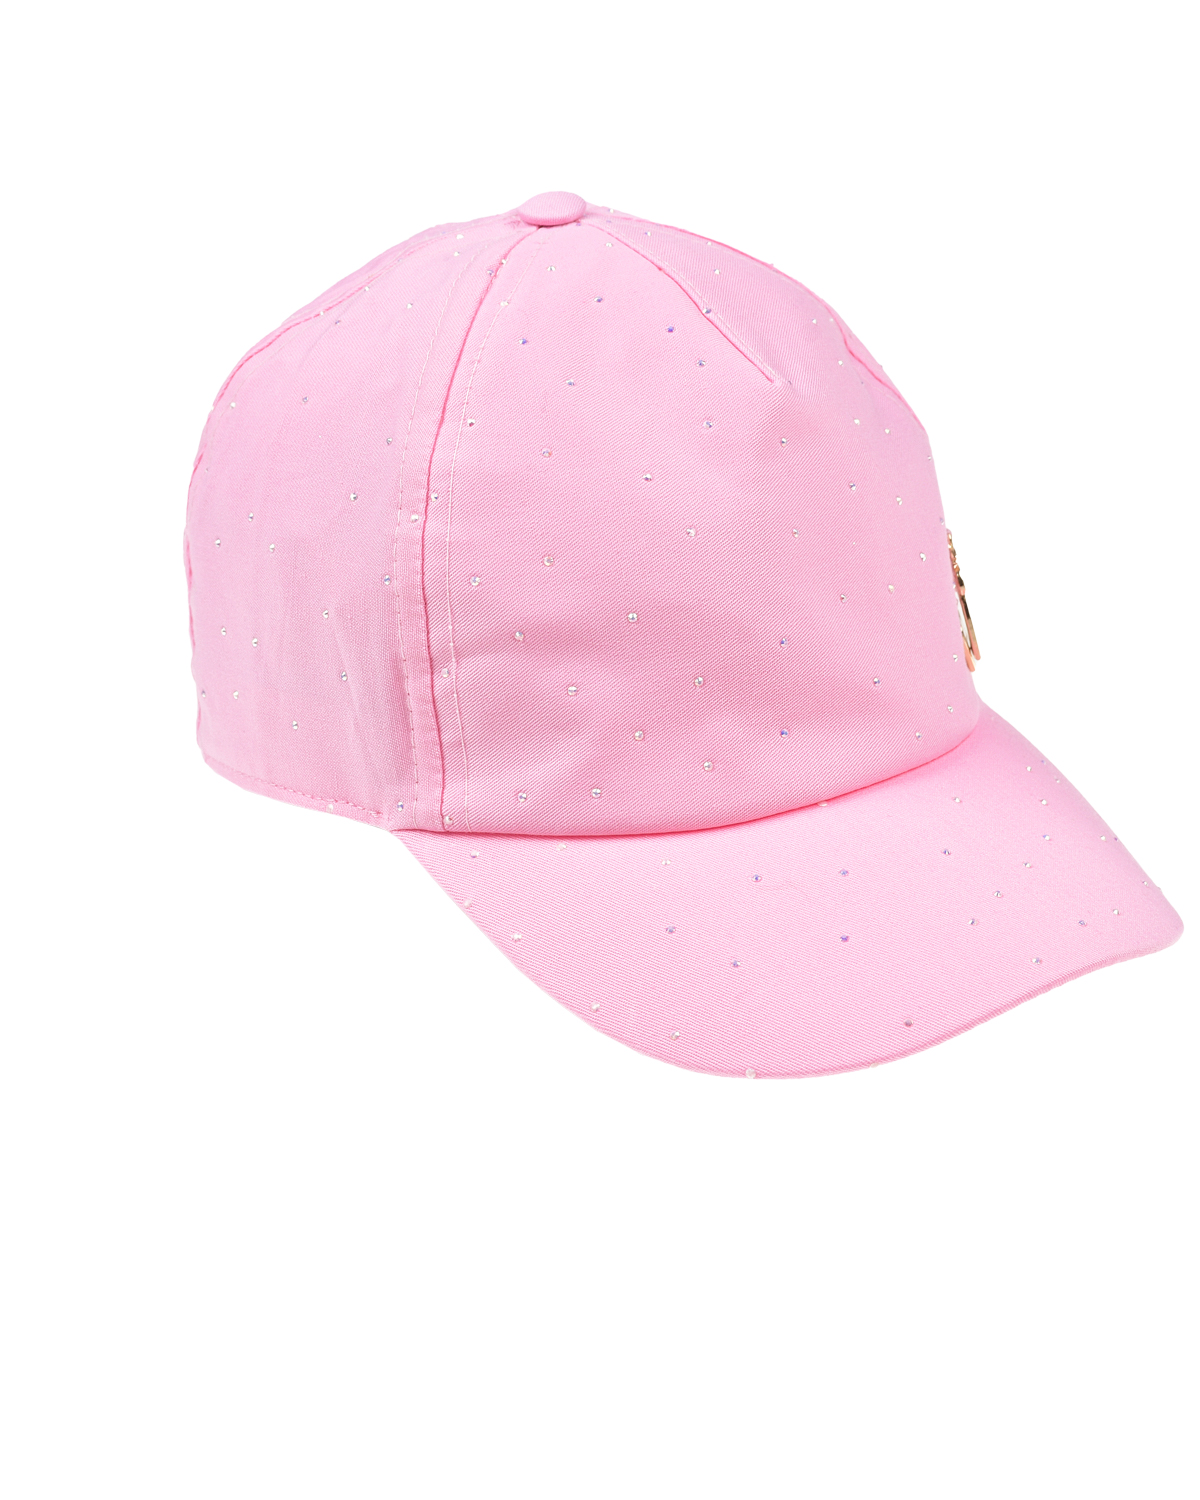 Розовая кепка со стразами Il Trenino, размер 56, цвет розовый